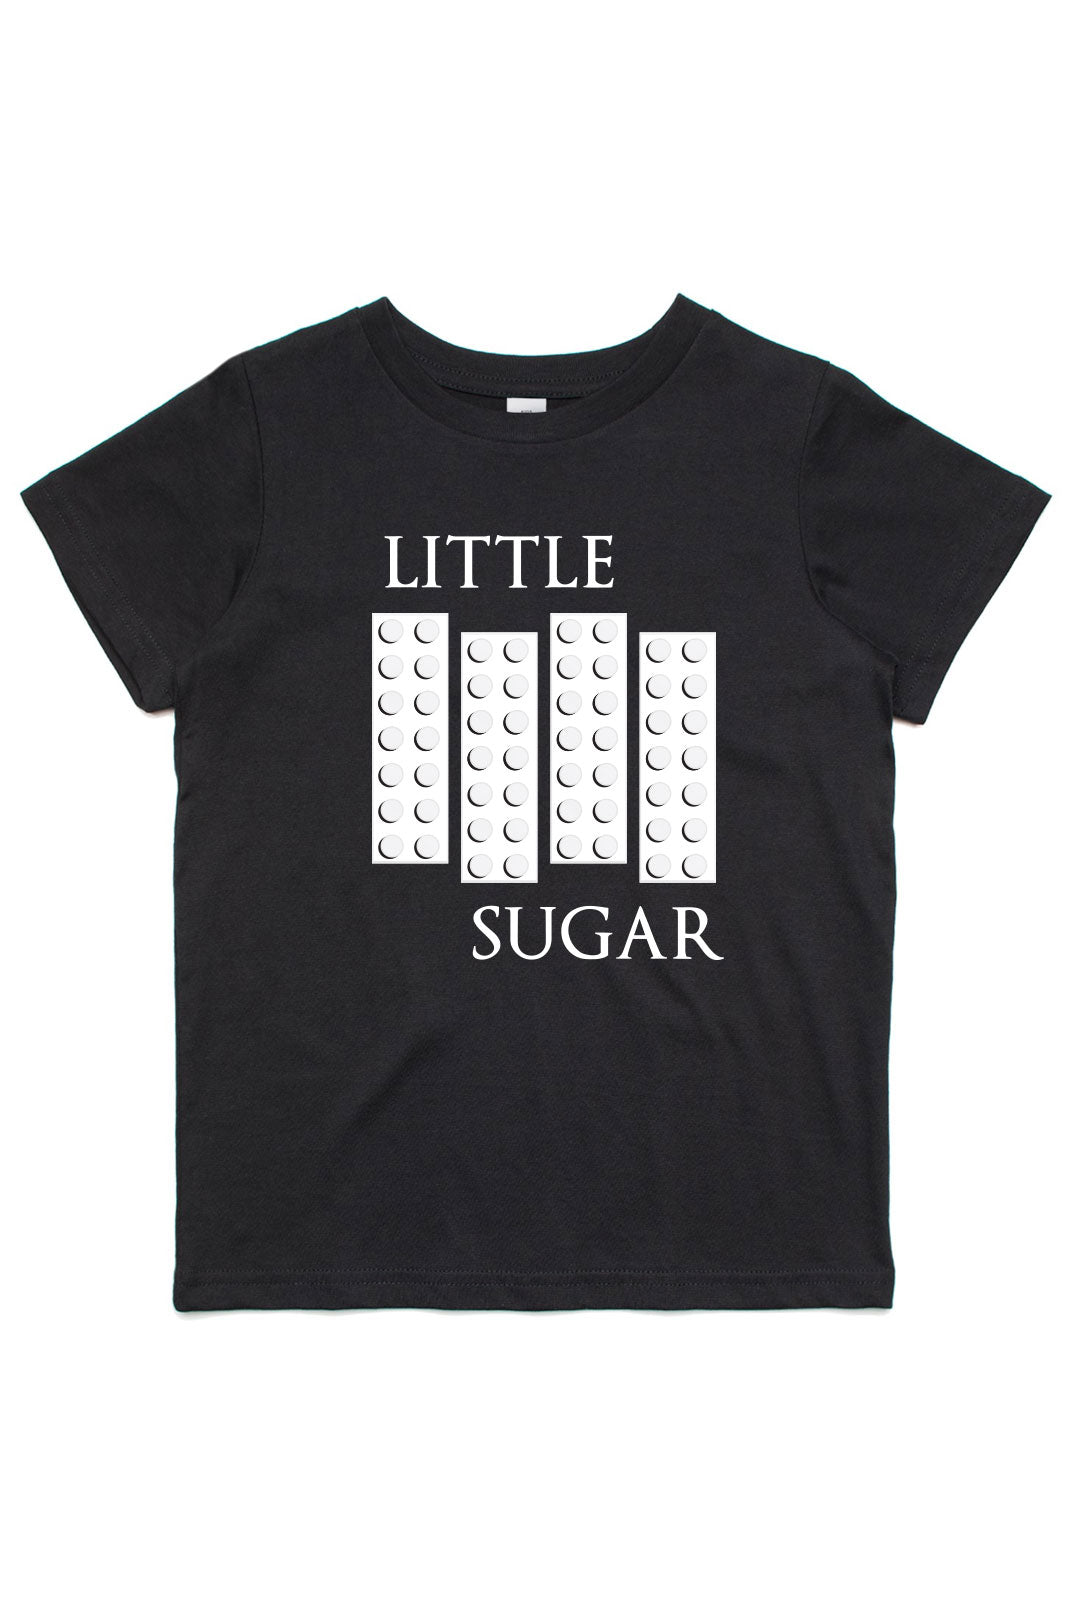 Little Sugar Lego Tee.